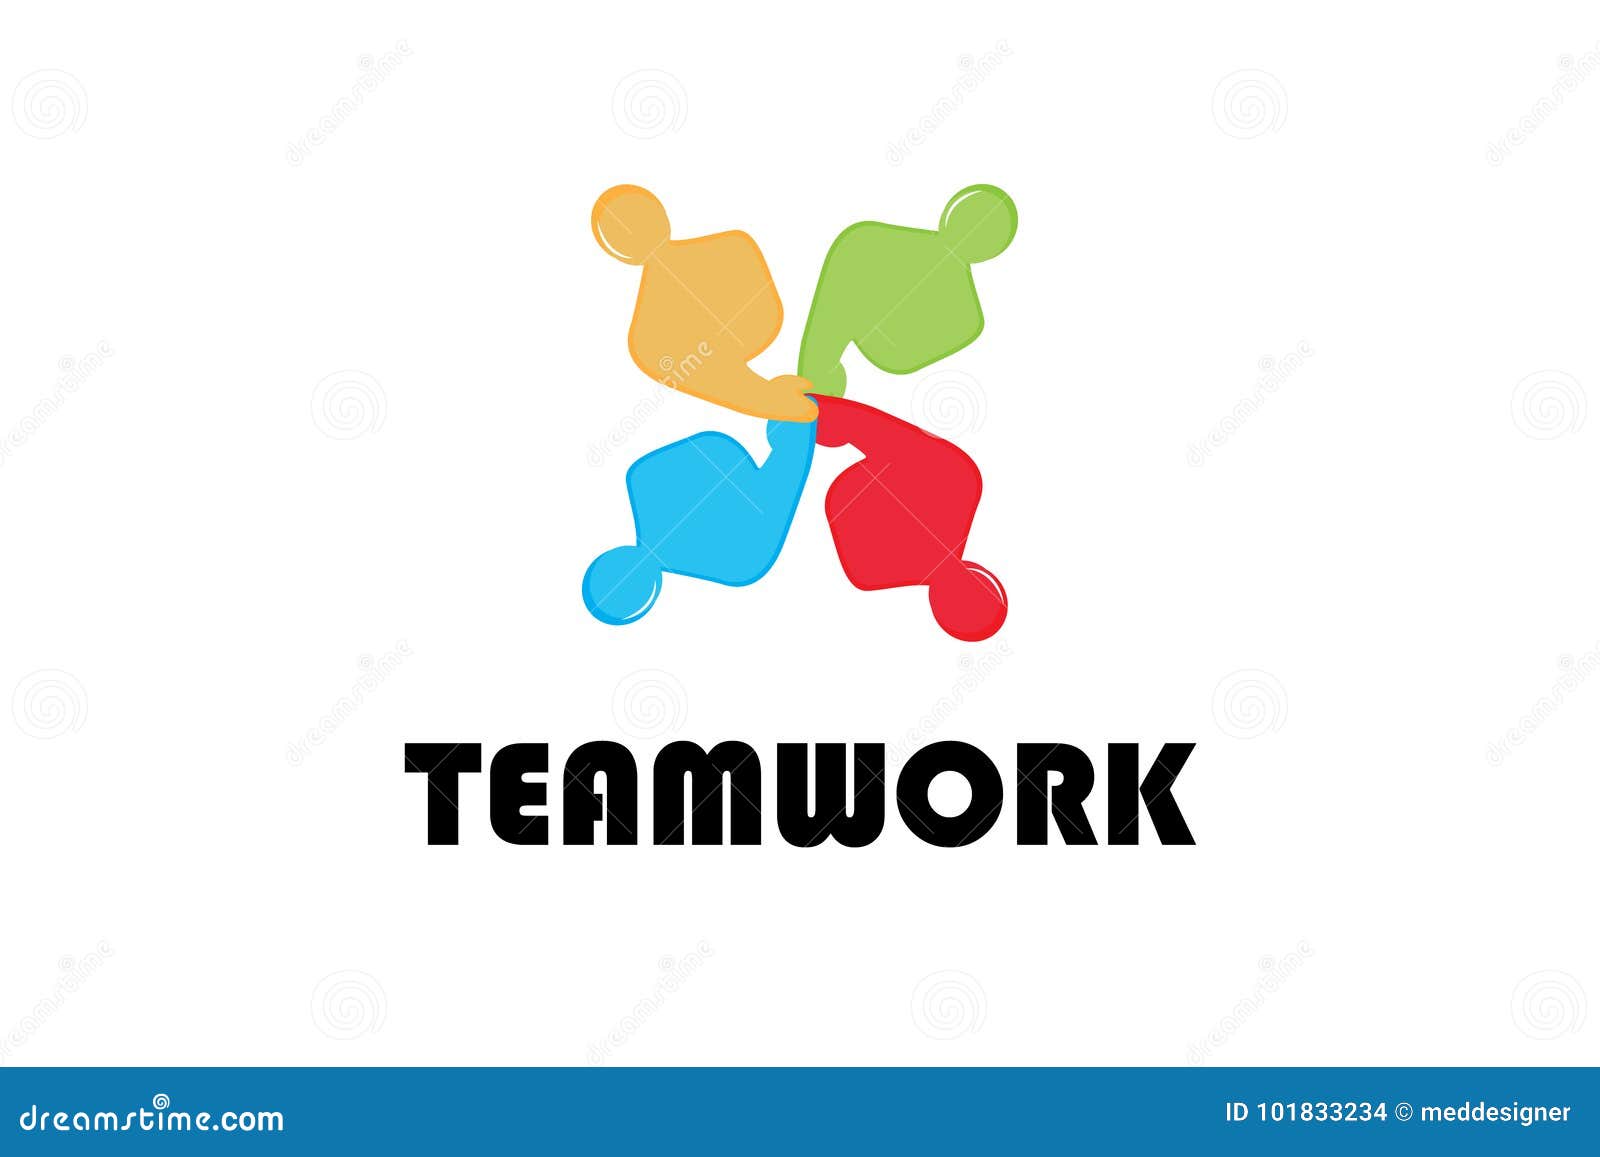 Team work logo stock vector. Illustration of business - 101833234